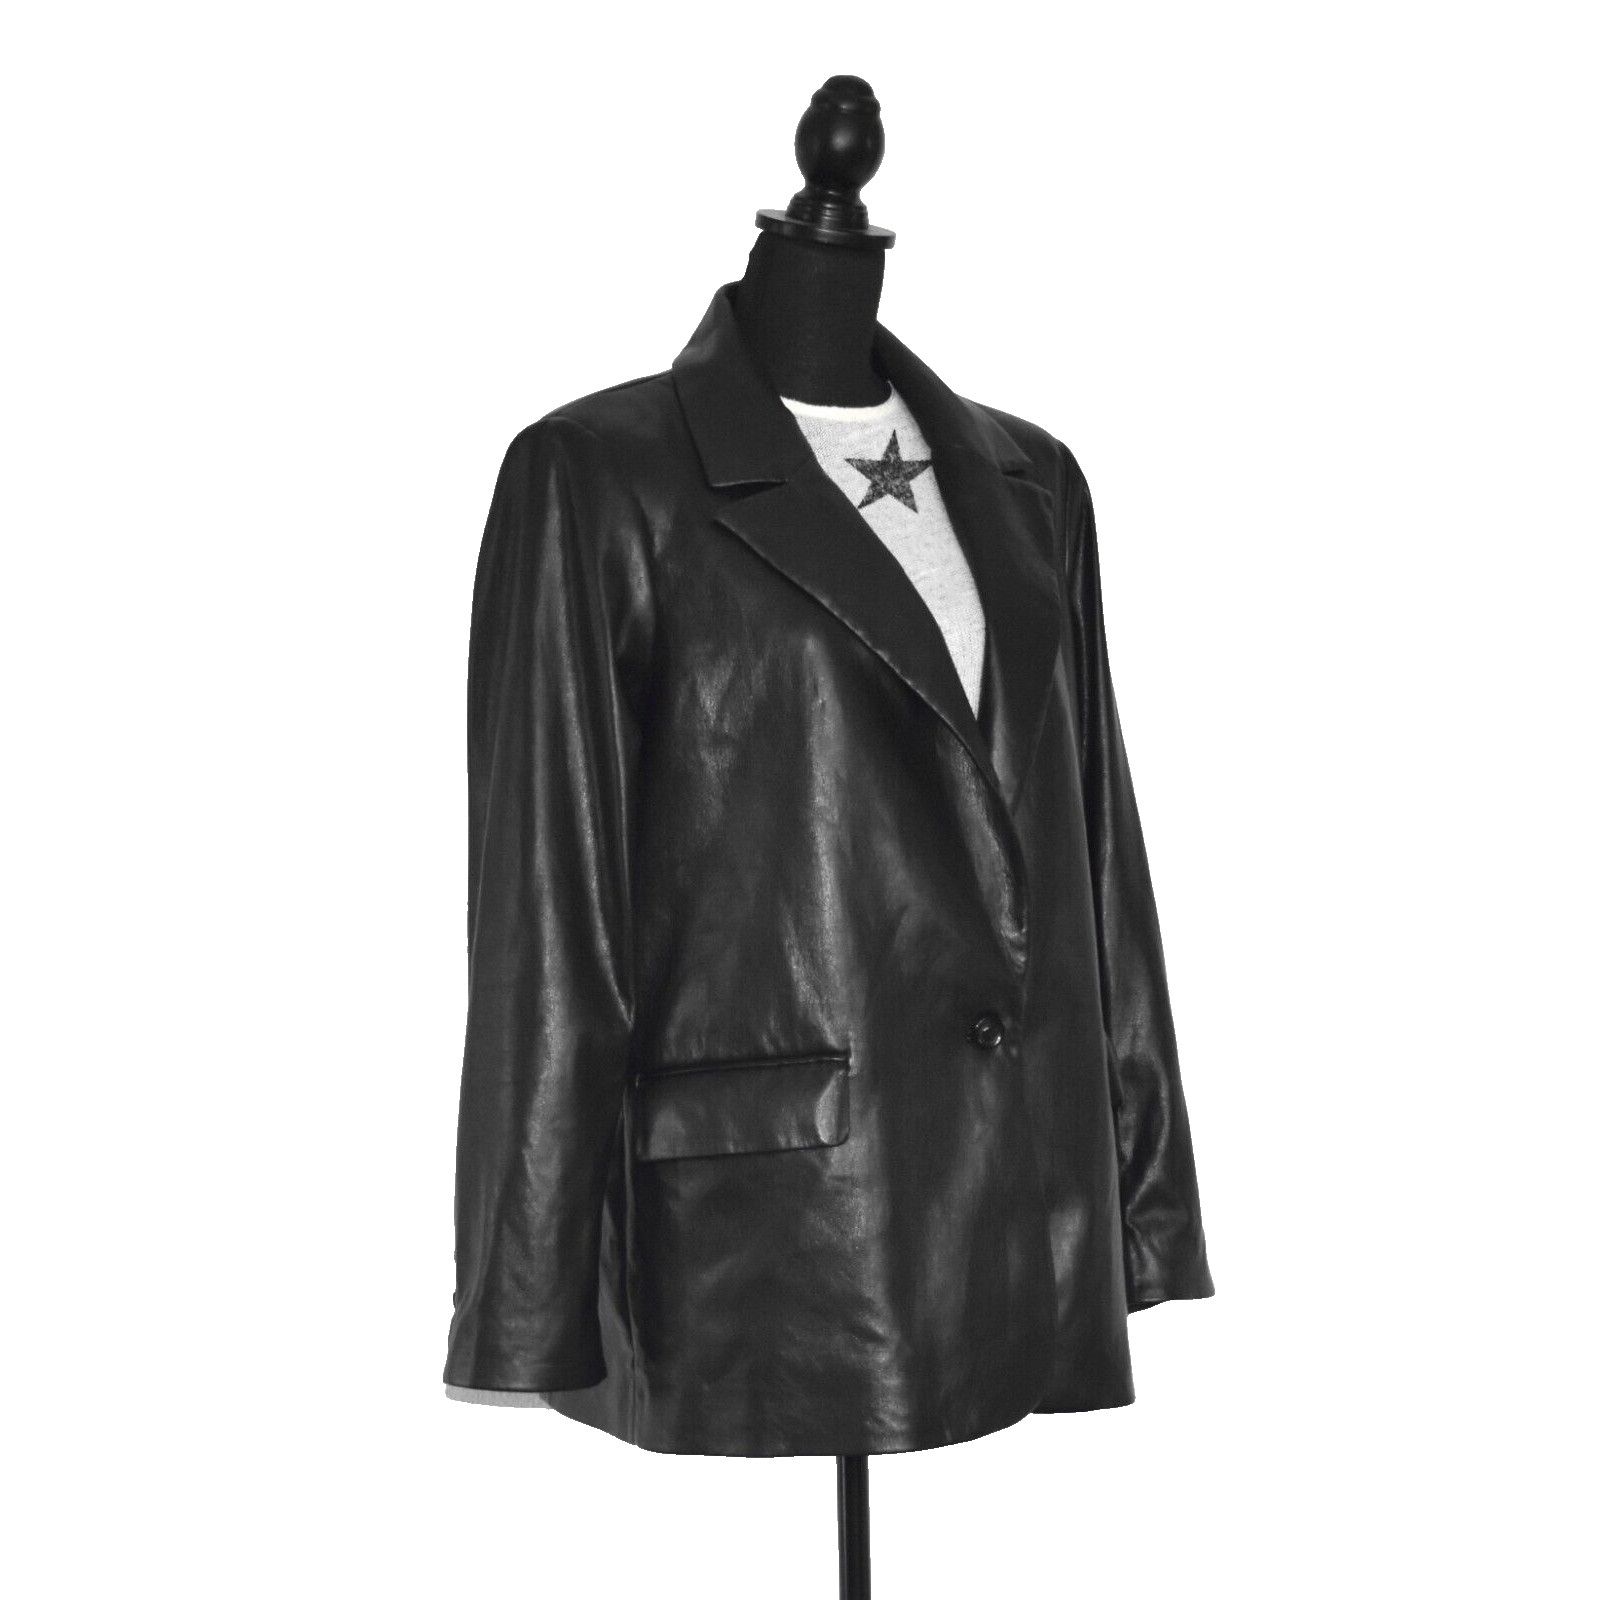 Alice + Olivia ALICE + OLIVIA Black Faux Leather Blazer Jacket Size L Size L / US 10 / IT 46 - 2 Preview